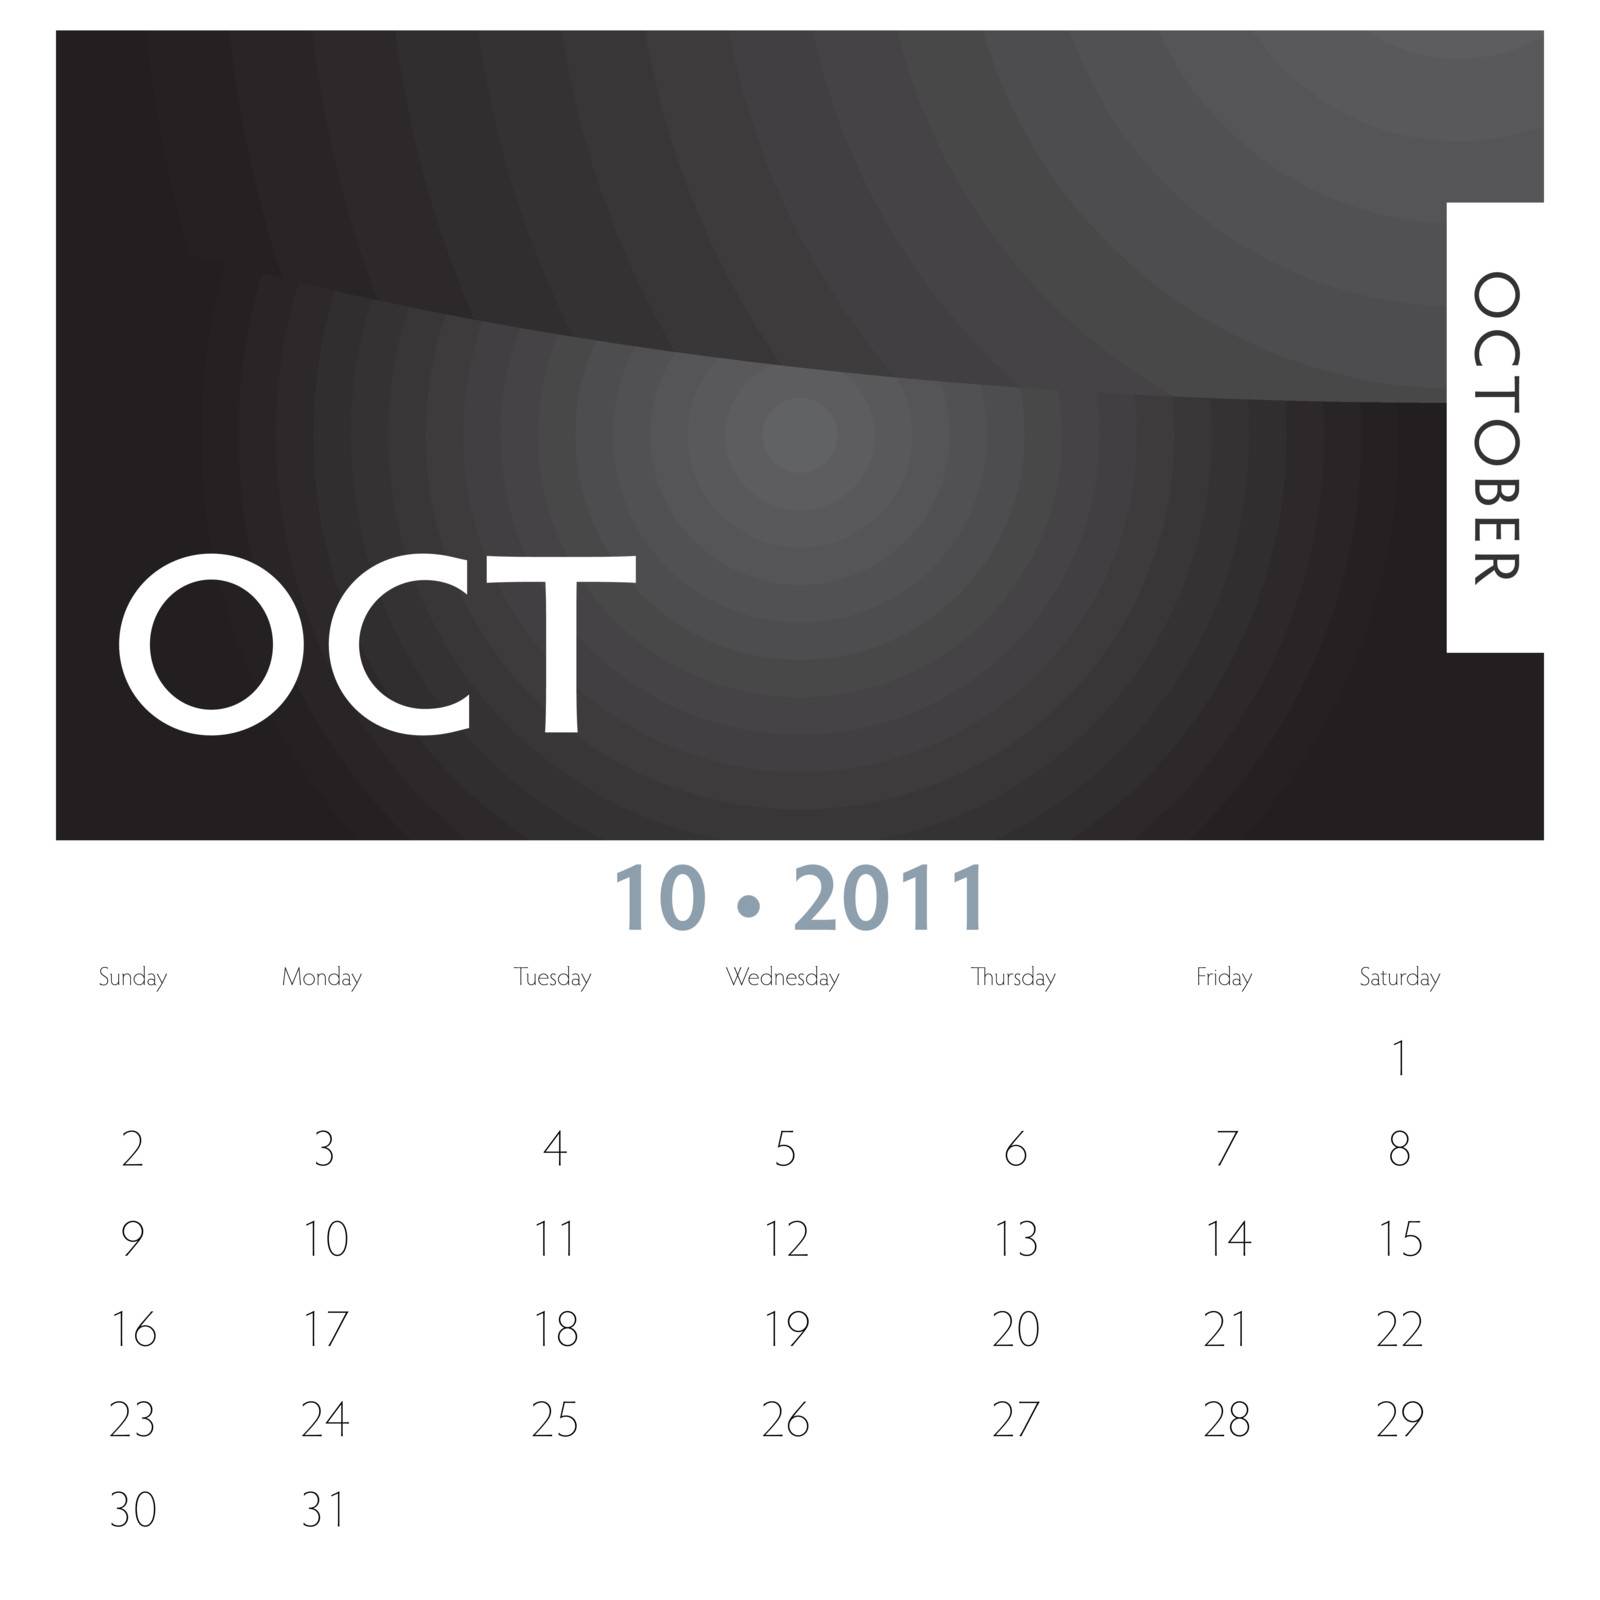 An image of a 2011 October calendar.